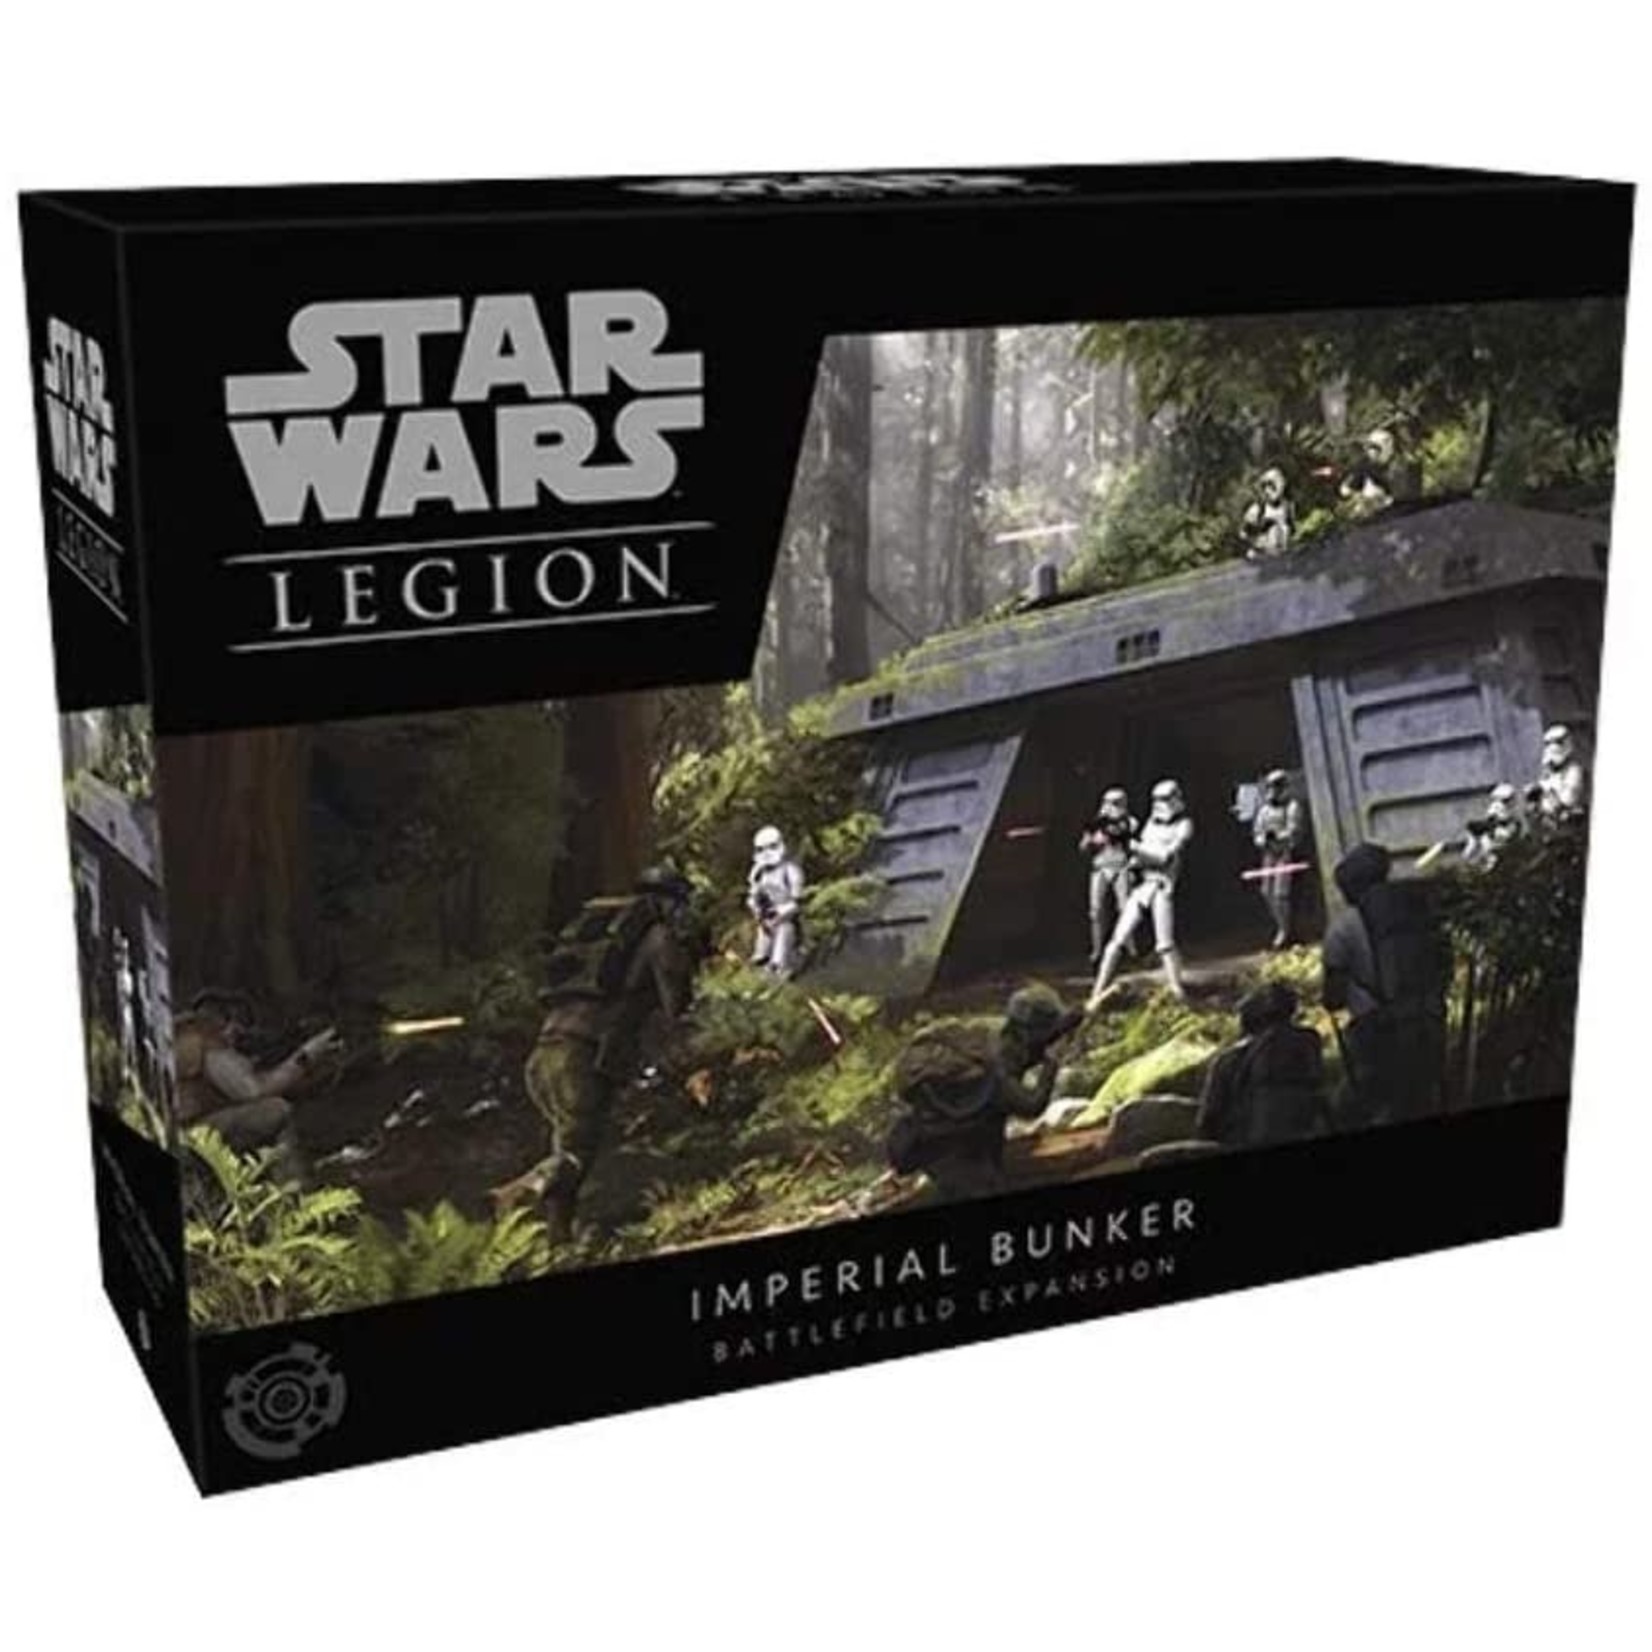 Star Wars Legion Imperial Bunker Expansion